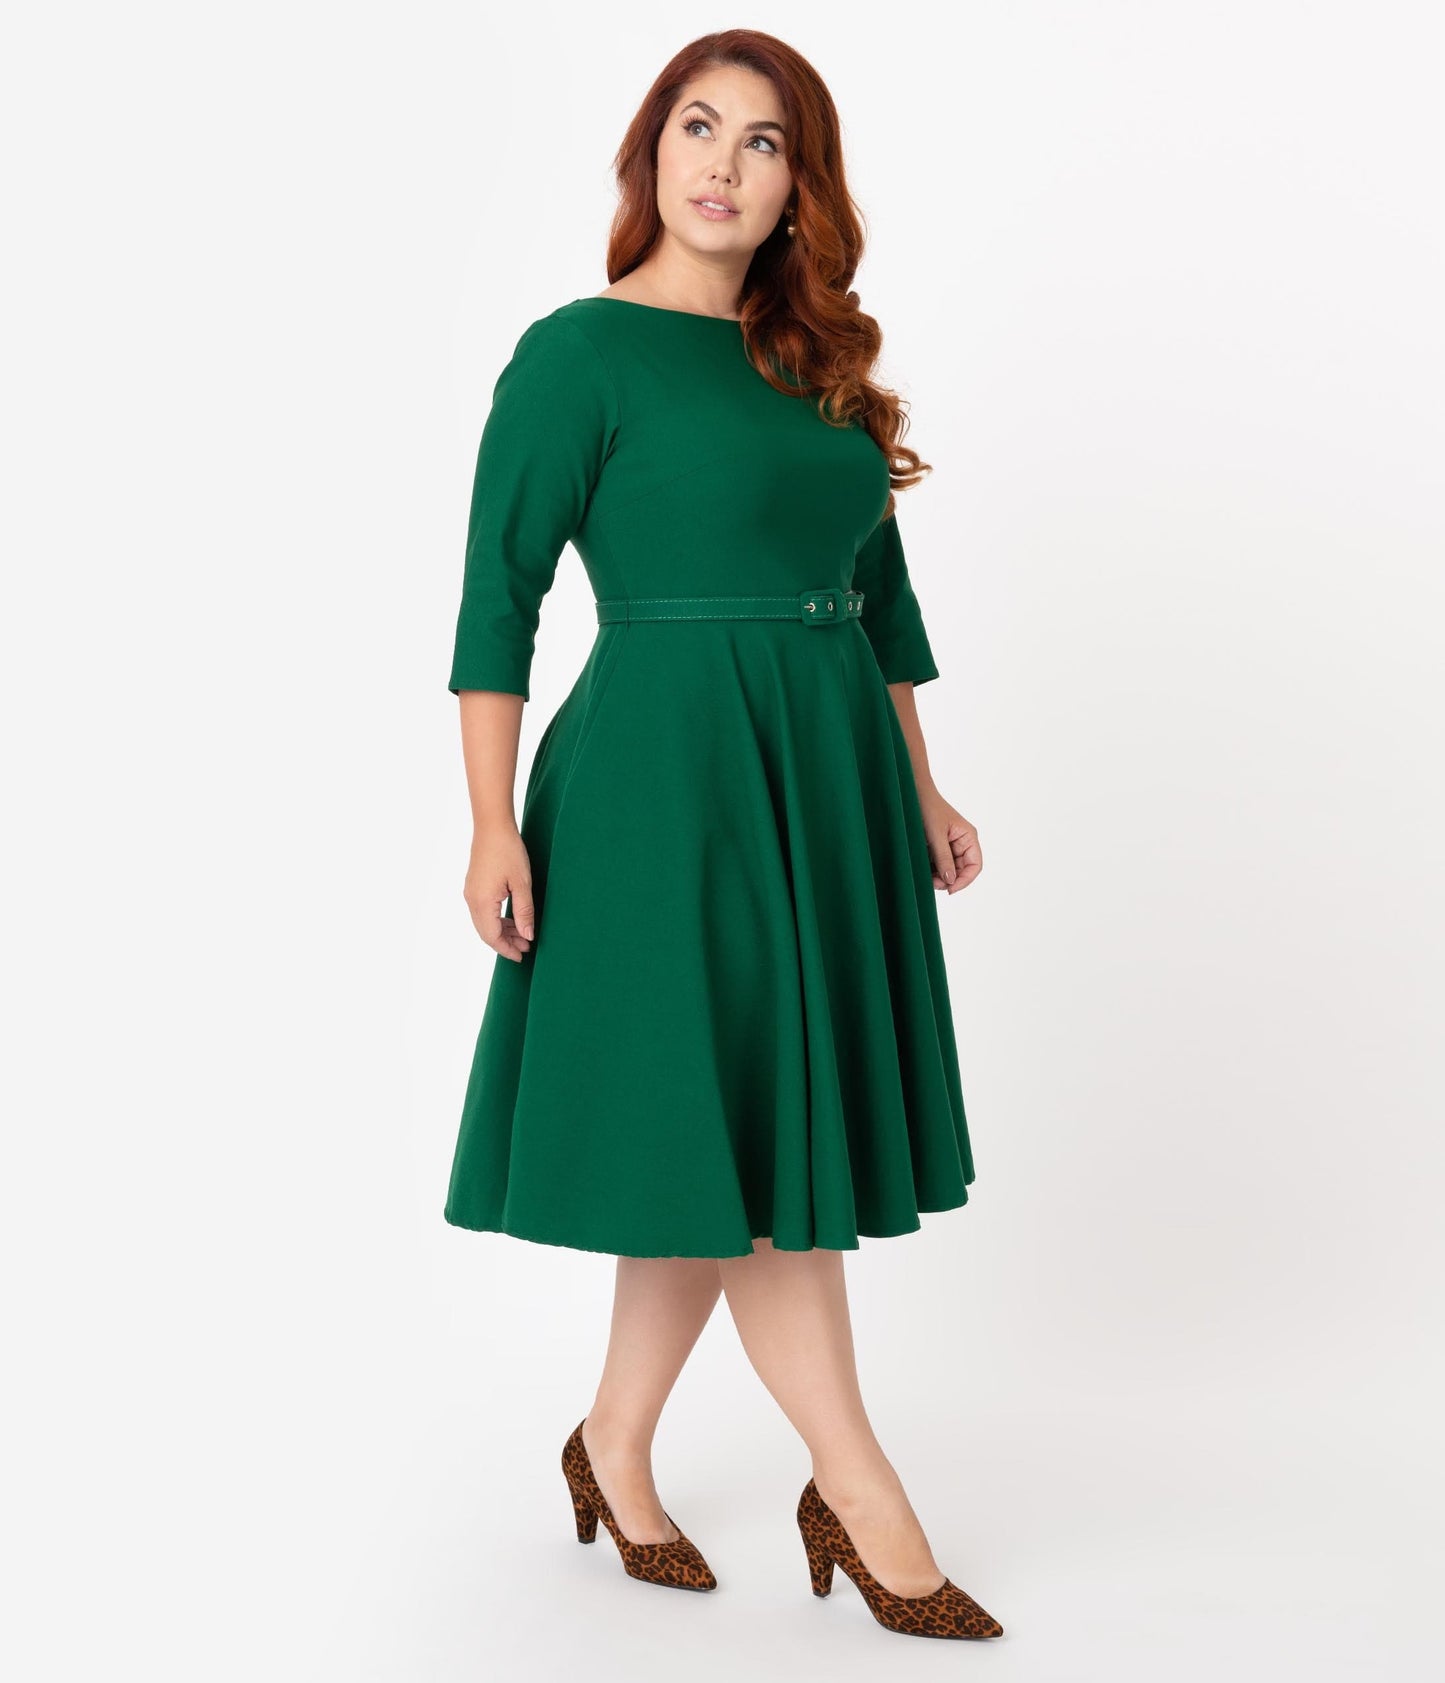 Unique Vintage Plus Size 1950s Style Emerald Green Stretch Sleeved Devon Swing Dress